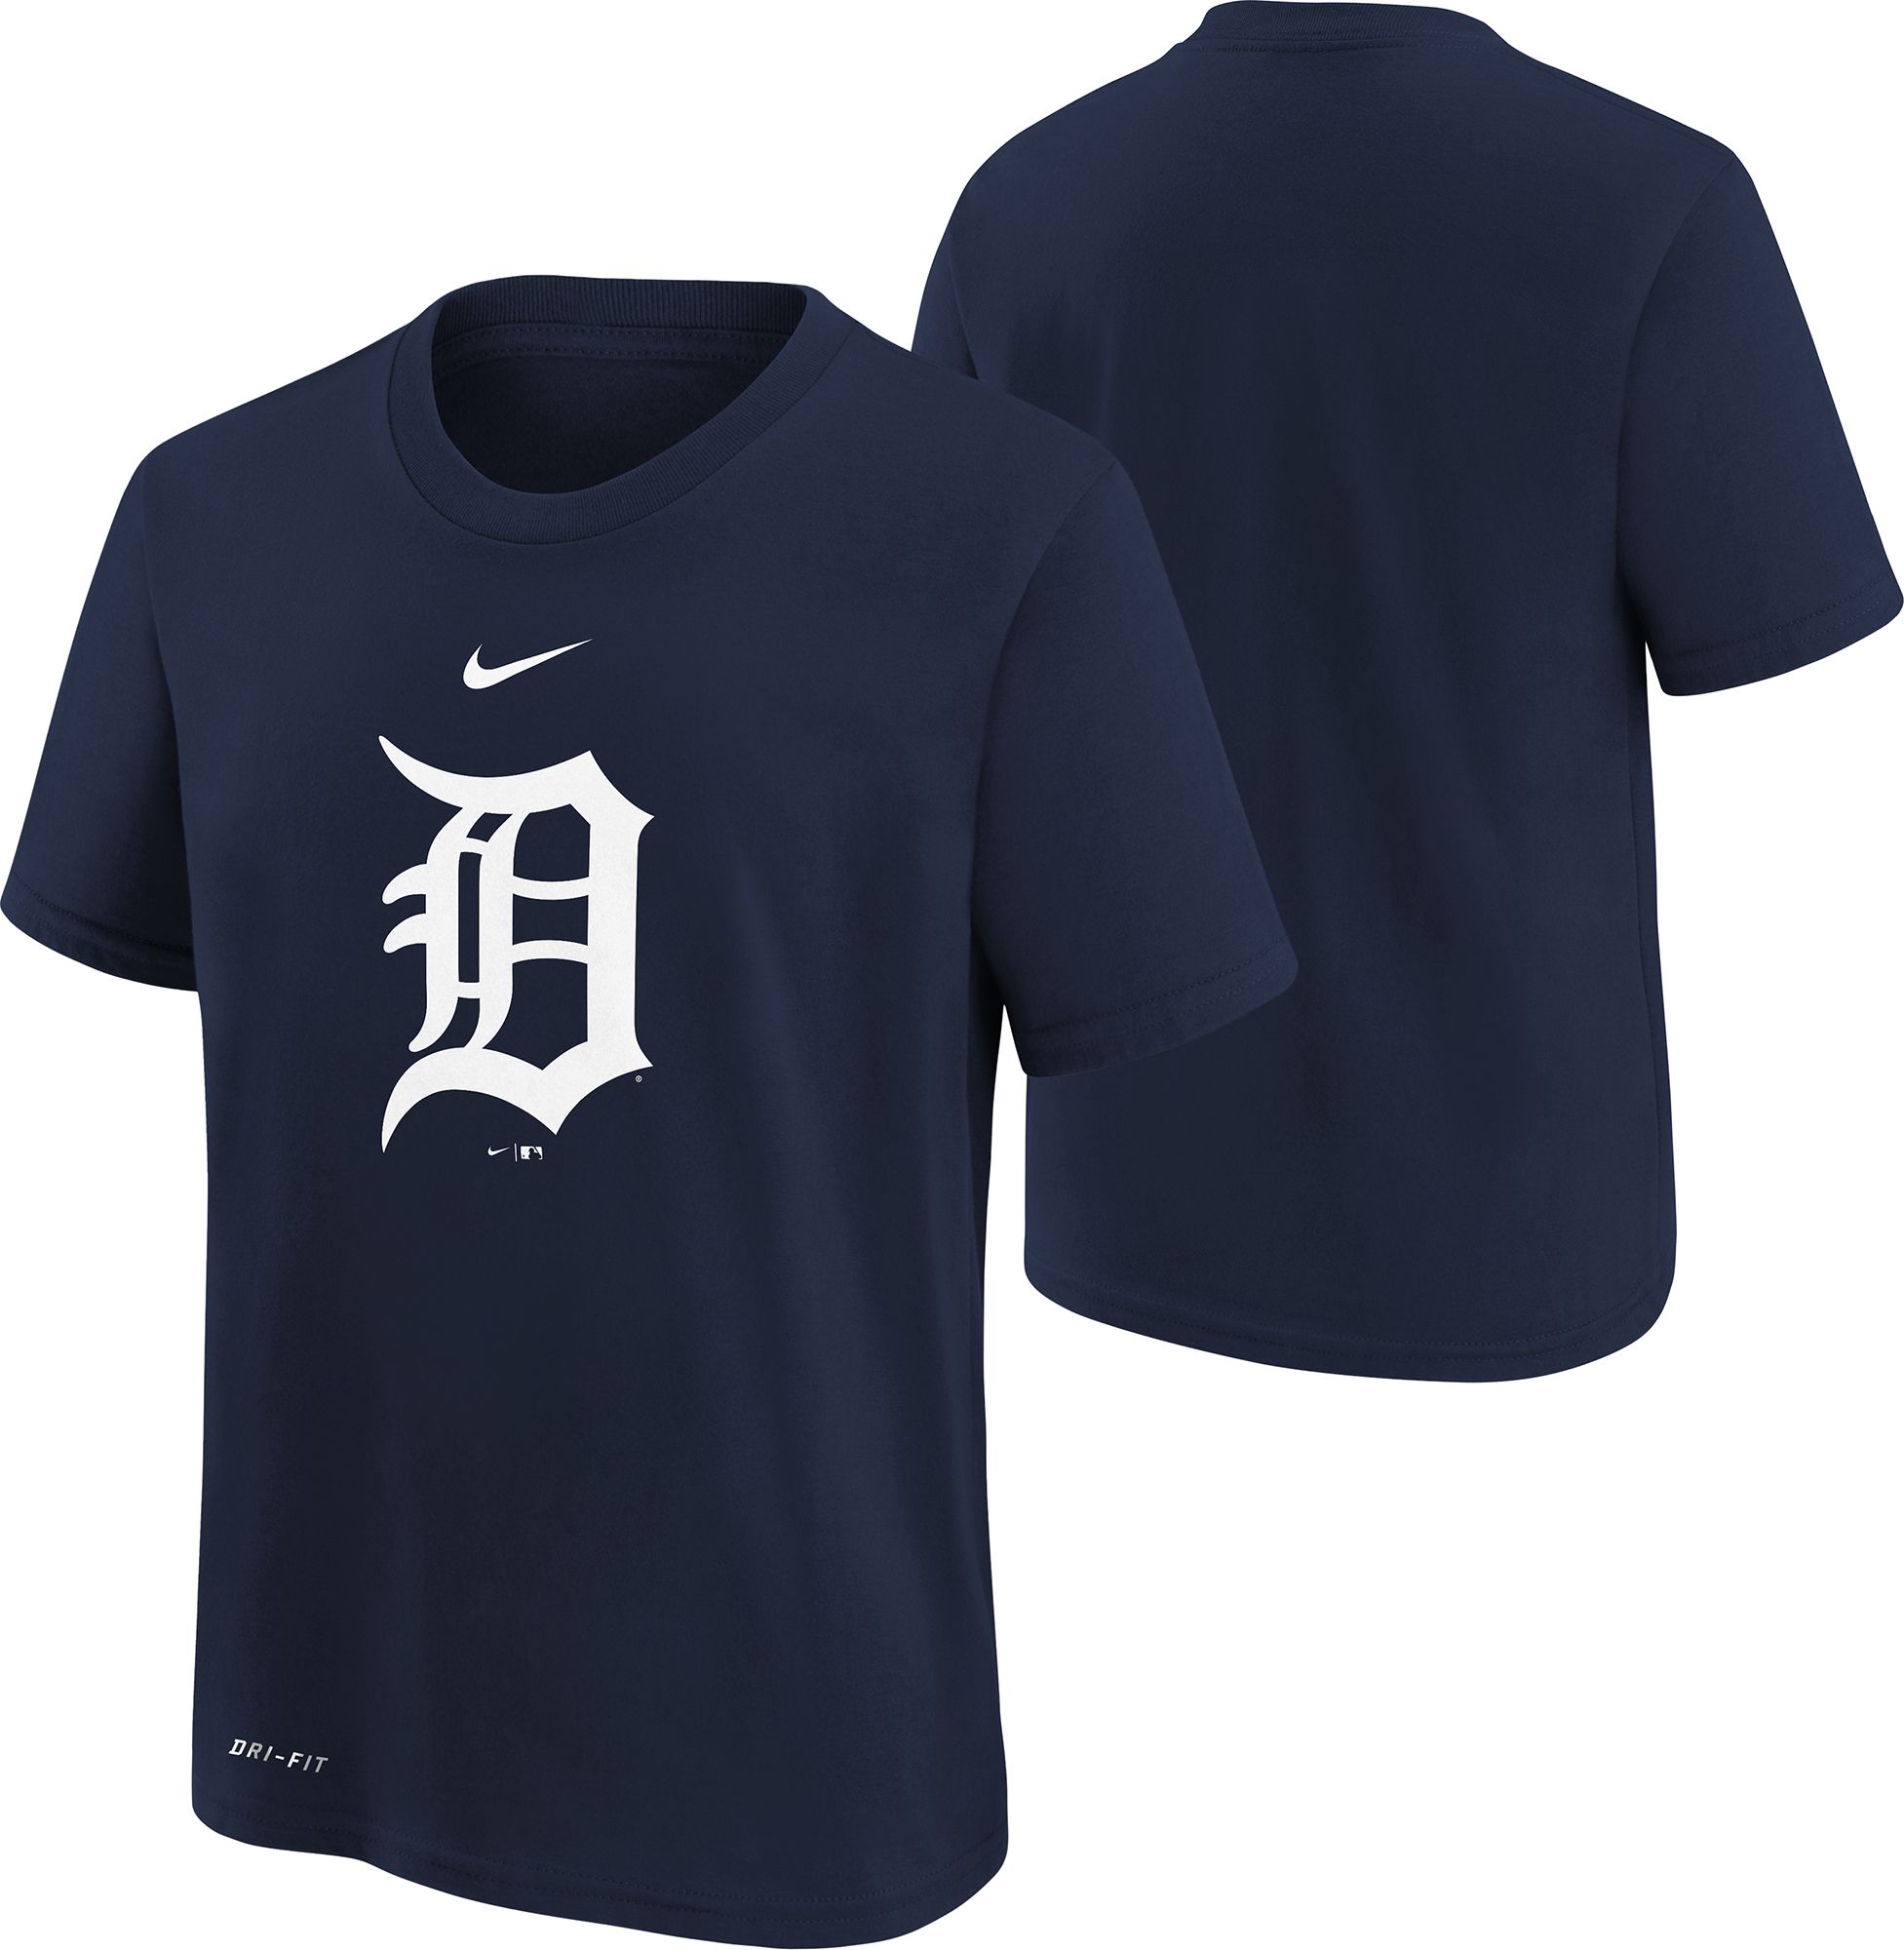 Nike / Youth Boys' Detroit Tigers Navy Logo Legend T-Shirt